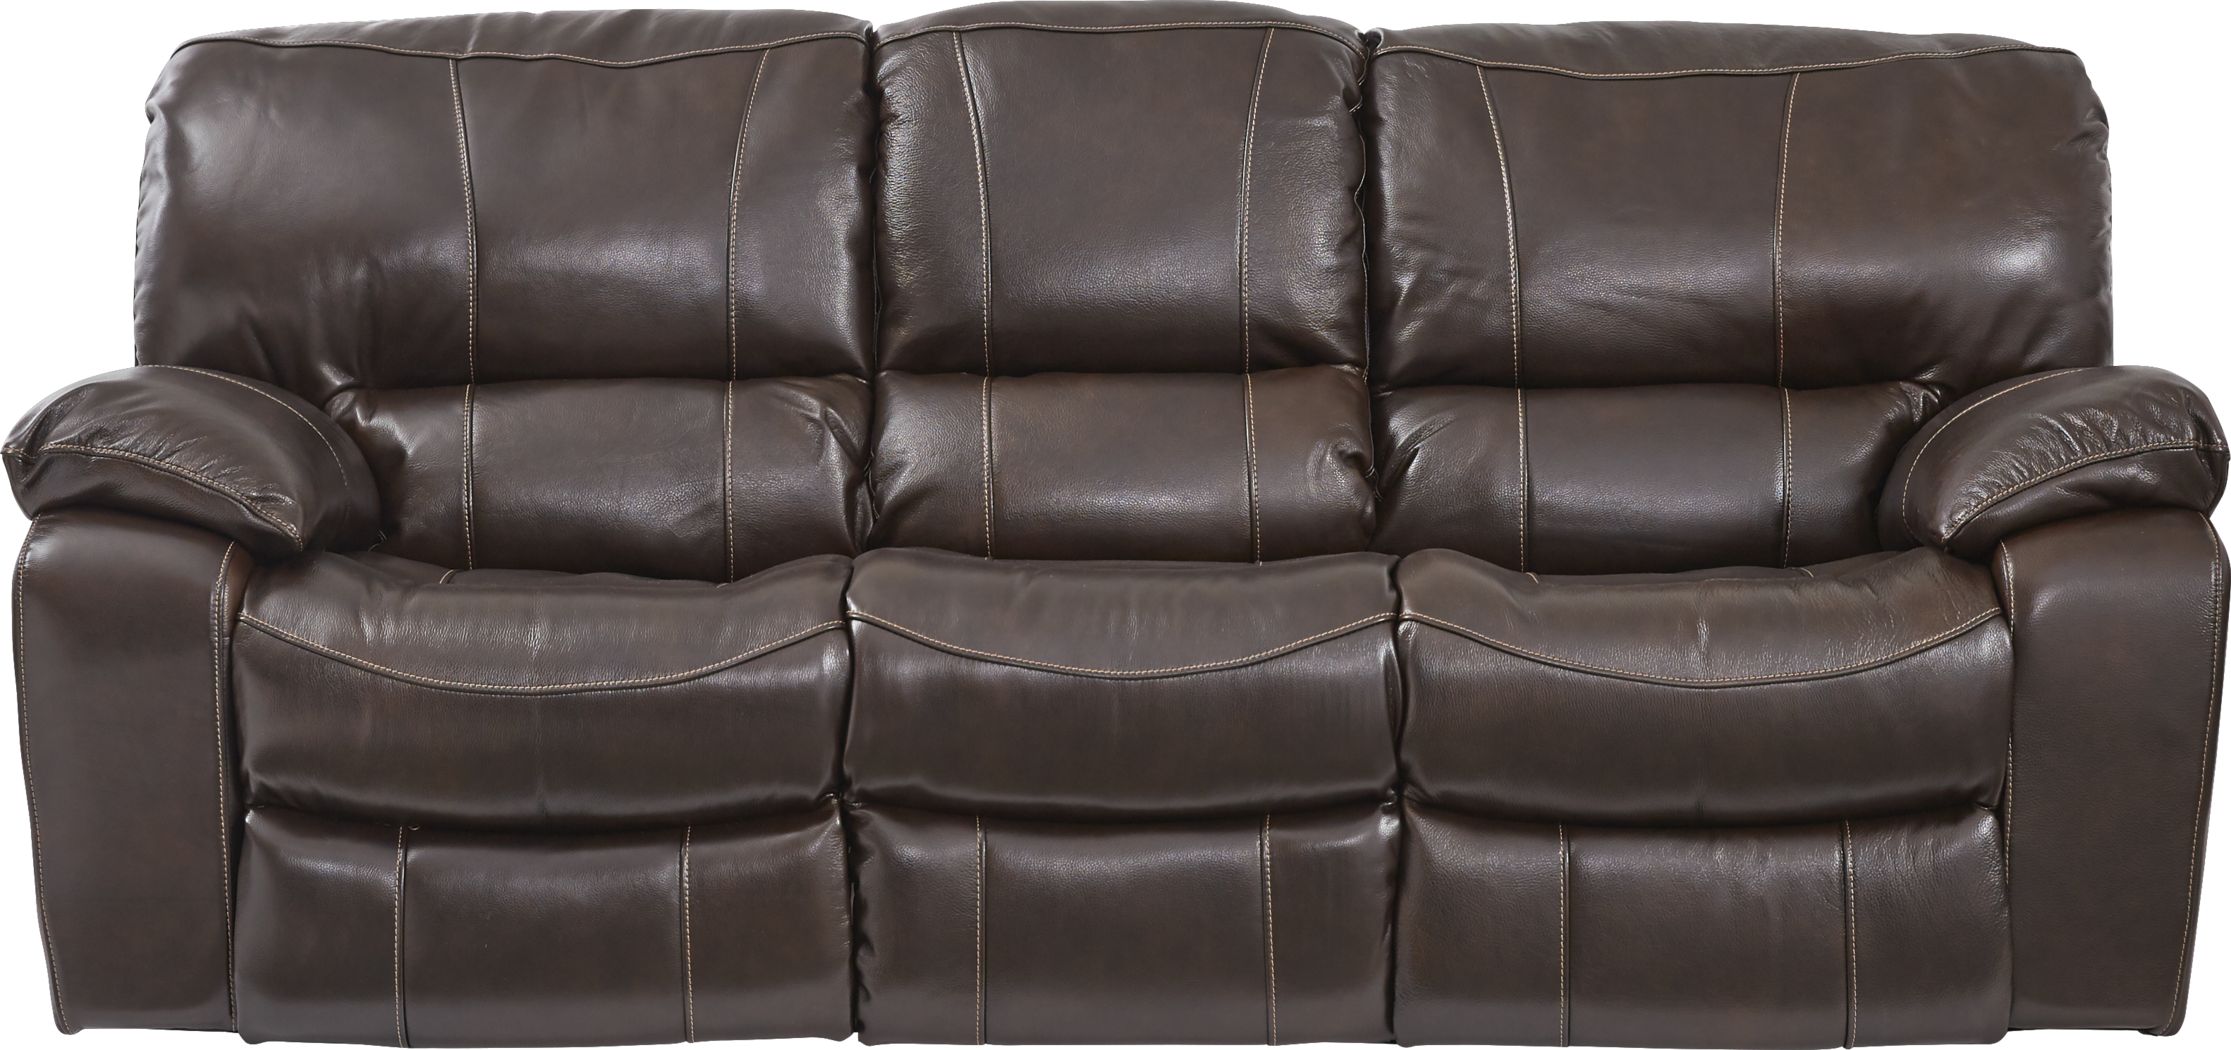 sereno walnut leather reclining sofa